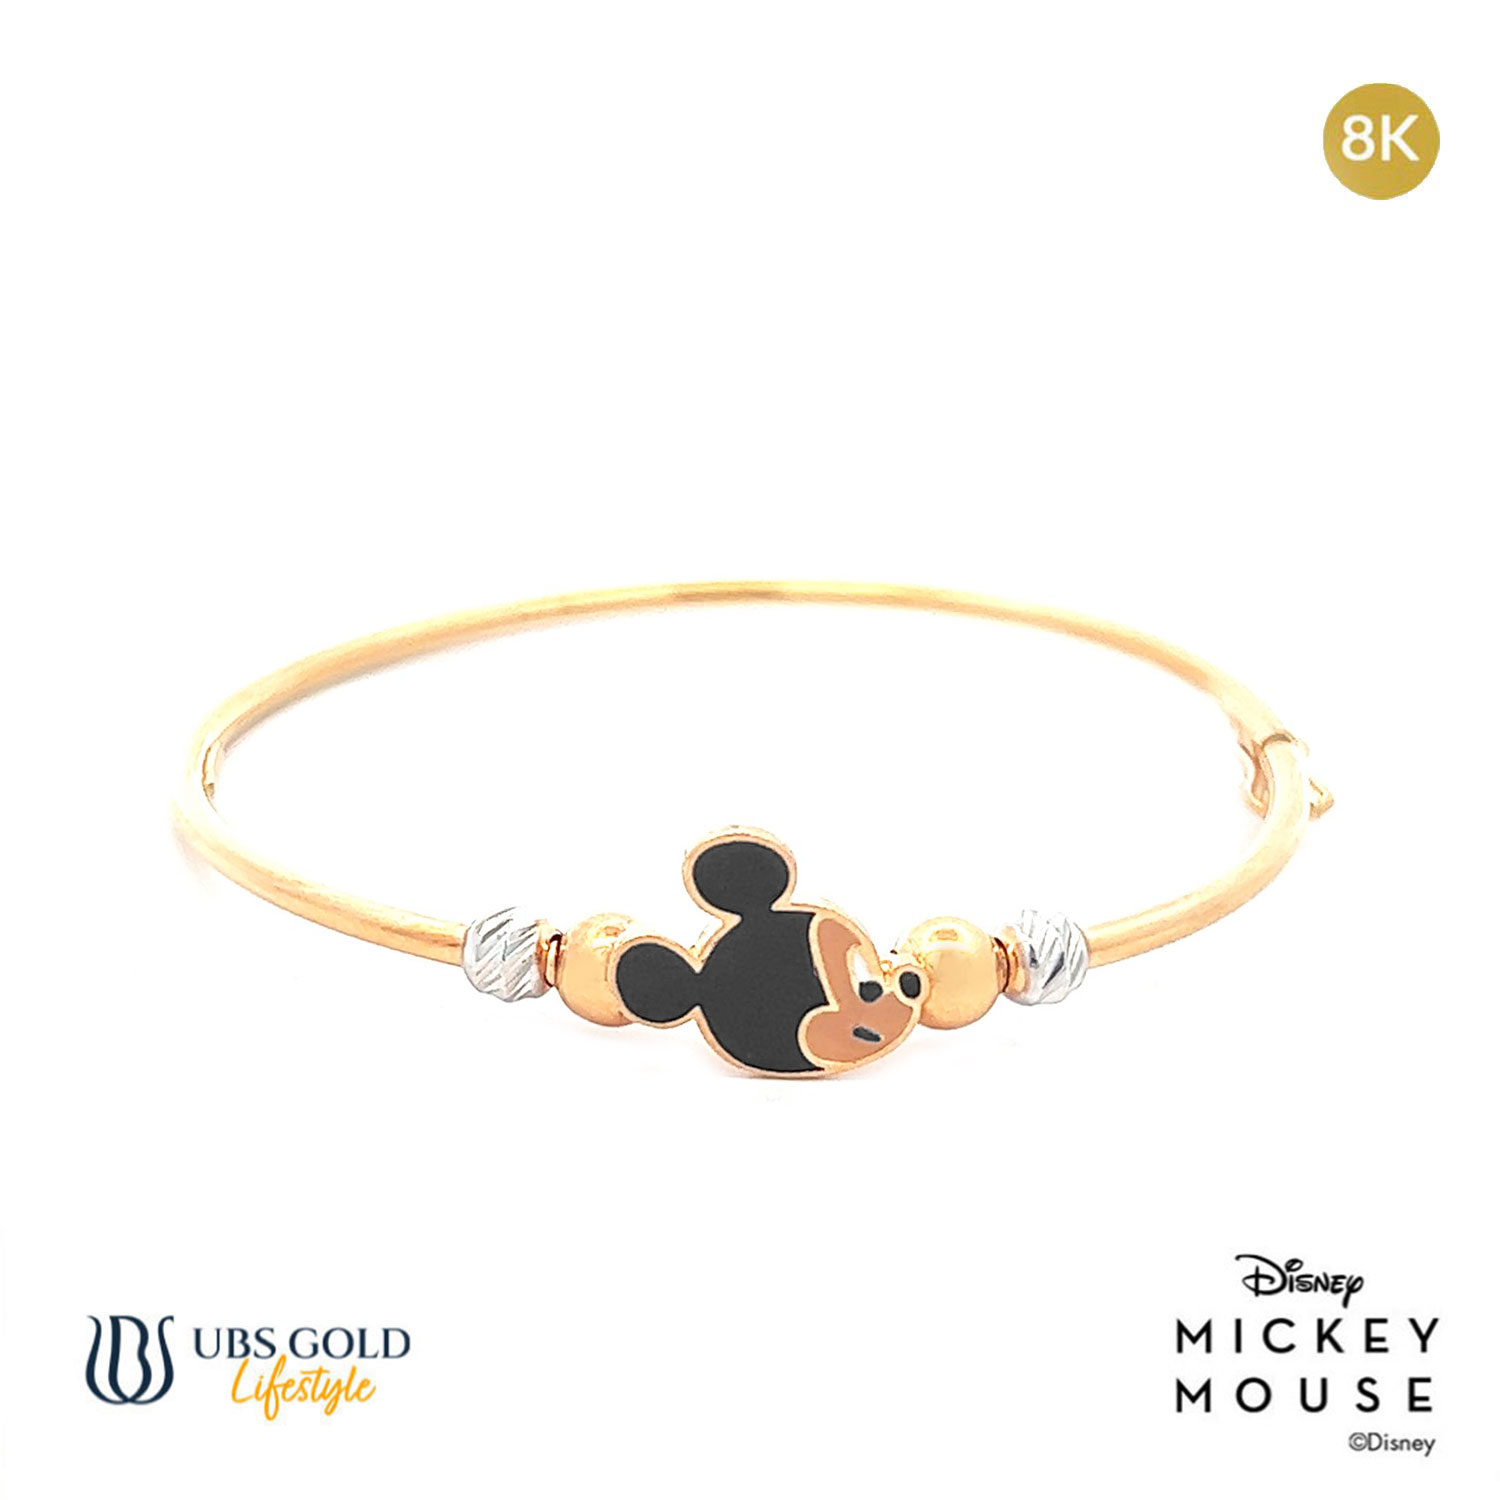 UBS Gold Gelang Emas Bayi Disney Mickey Mouse - Vgy0091K - 8K